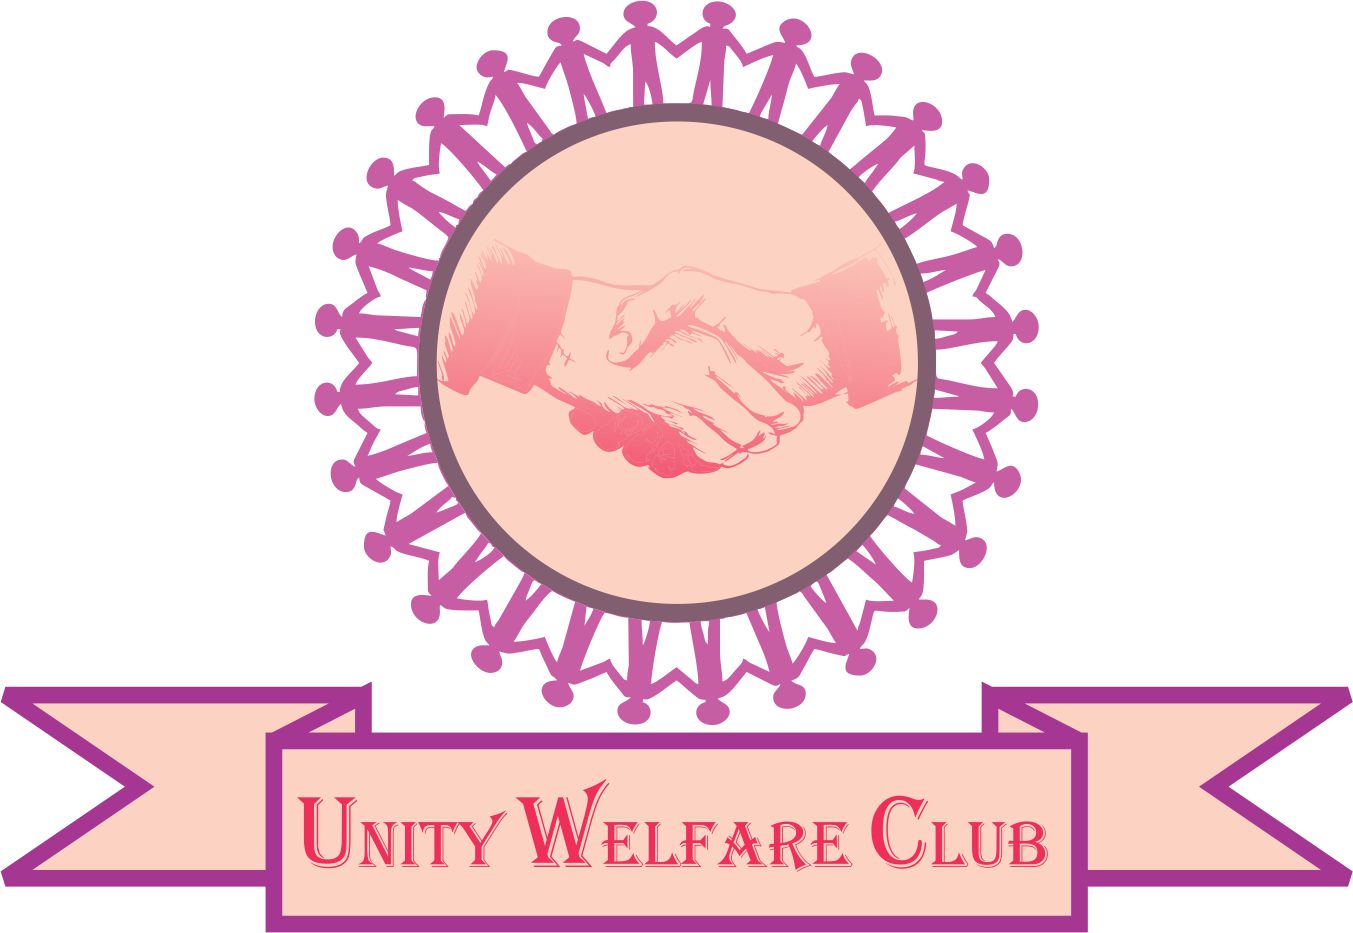 UNITY WELFARE CLUB